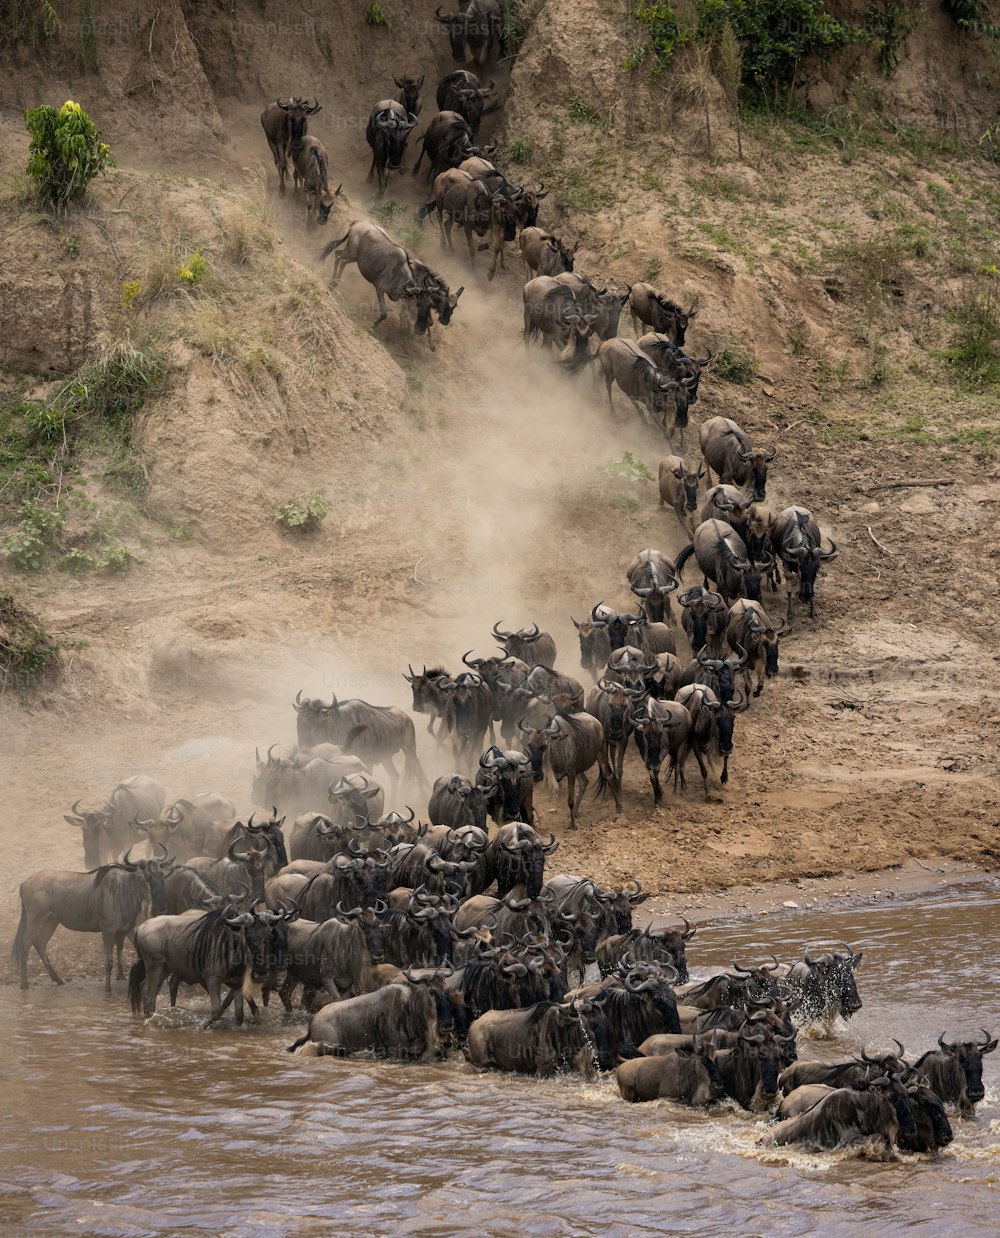 The wildebeest migration in Africa photo – Mammal Image on Unsplash